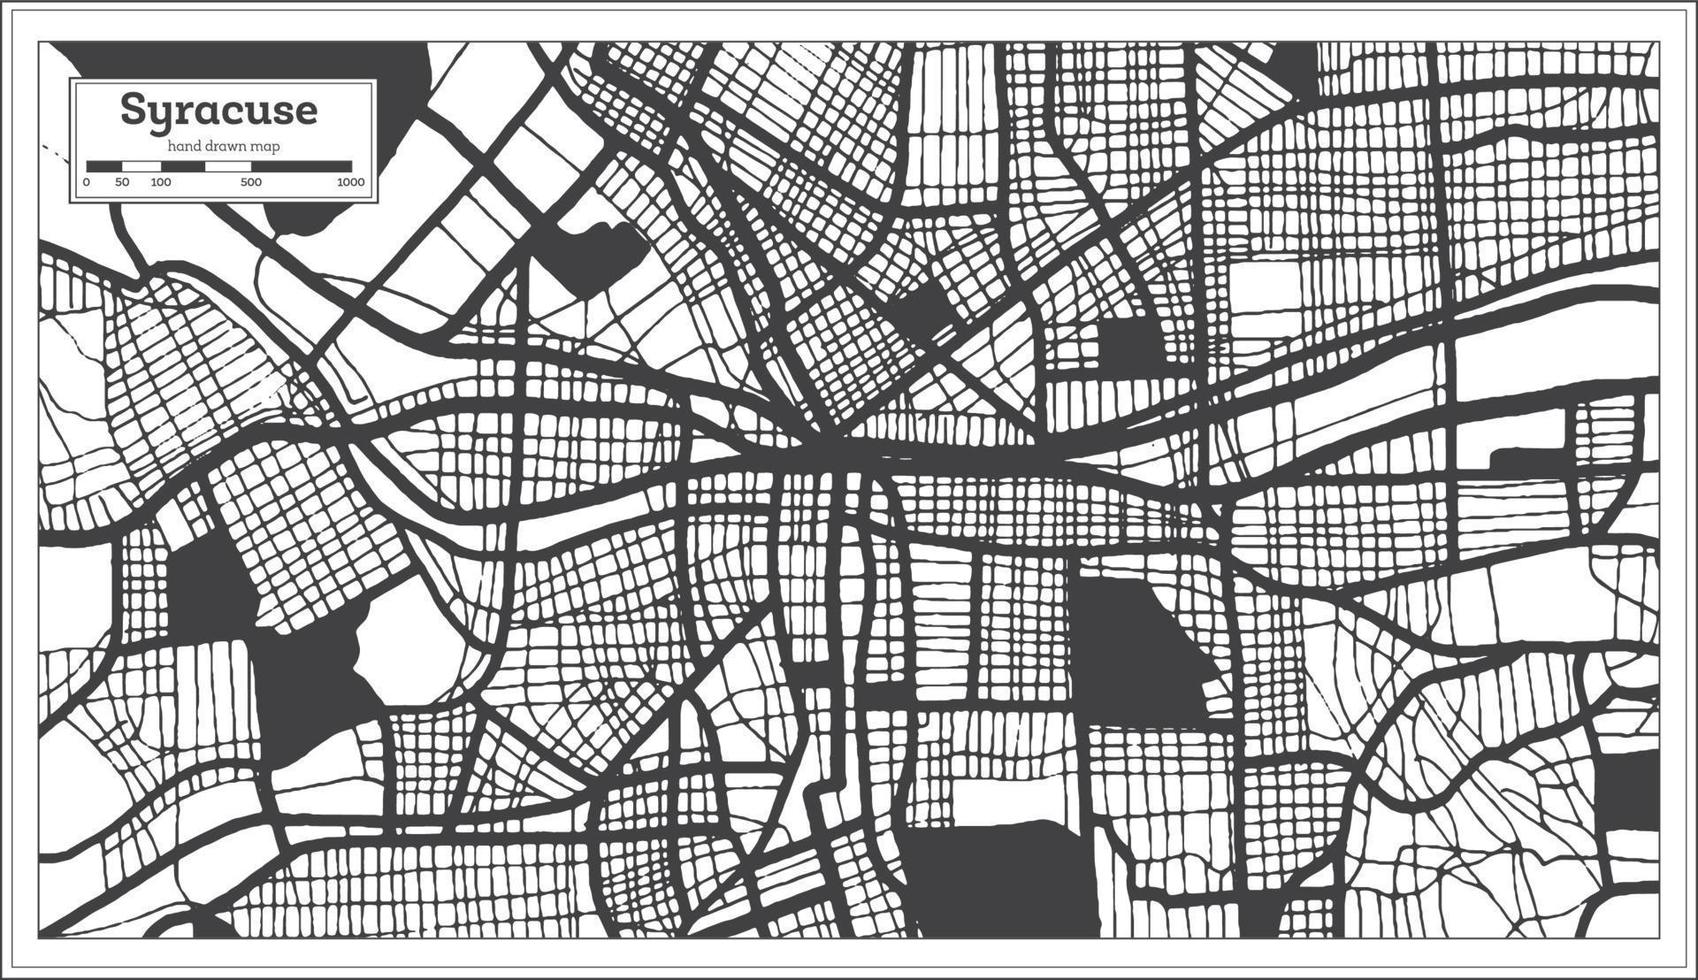 siracusa Stati Uniti d'America città carta geografica nel nero e bianca colore nel retrò stile. schema carta geografica. vettore